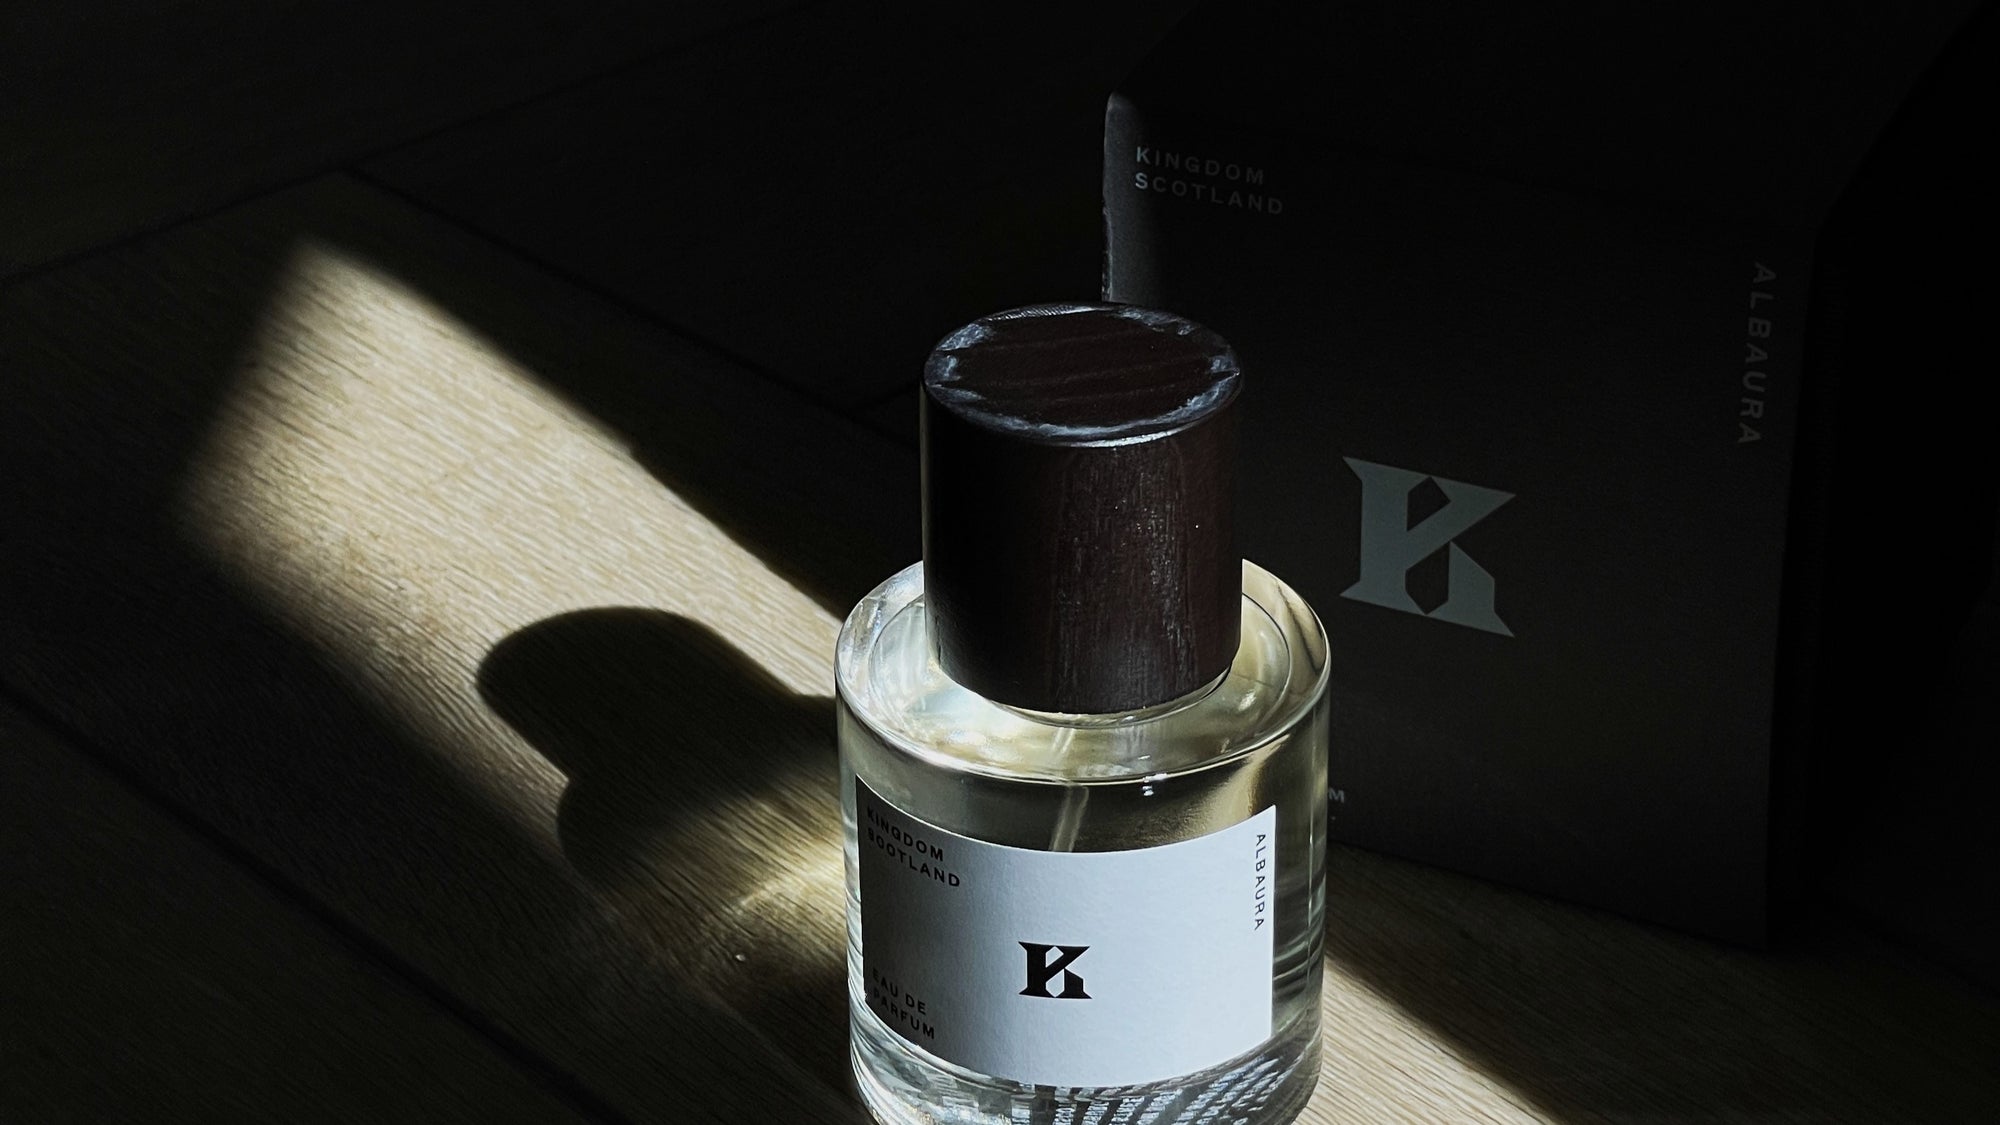 Behind The Brand: Kingdom Perfume